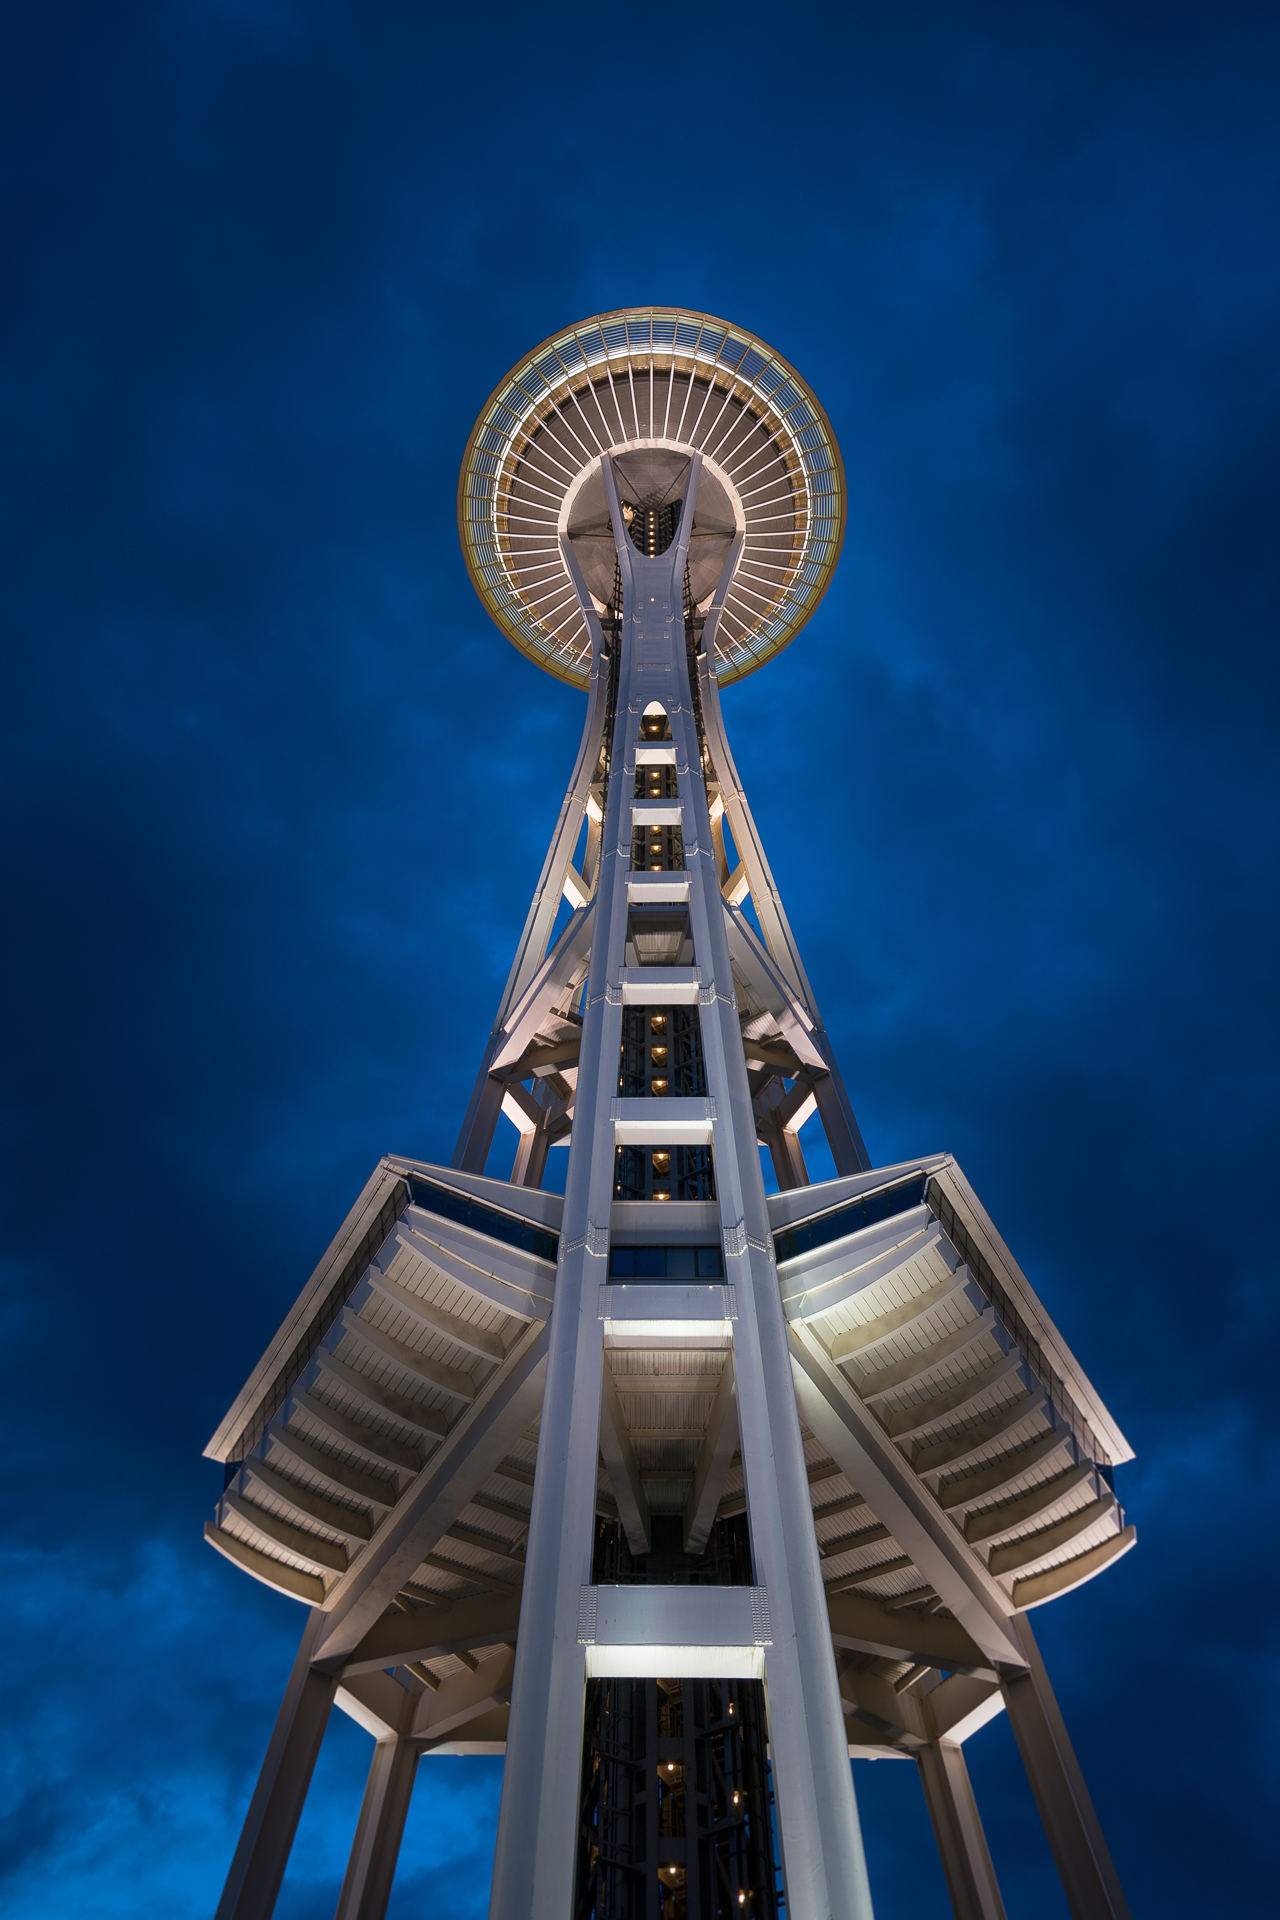 Seattle's iconic Space Needle by night (Photo credit: Ali Elhajj)